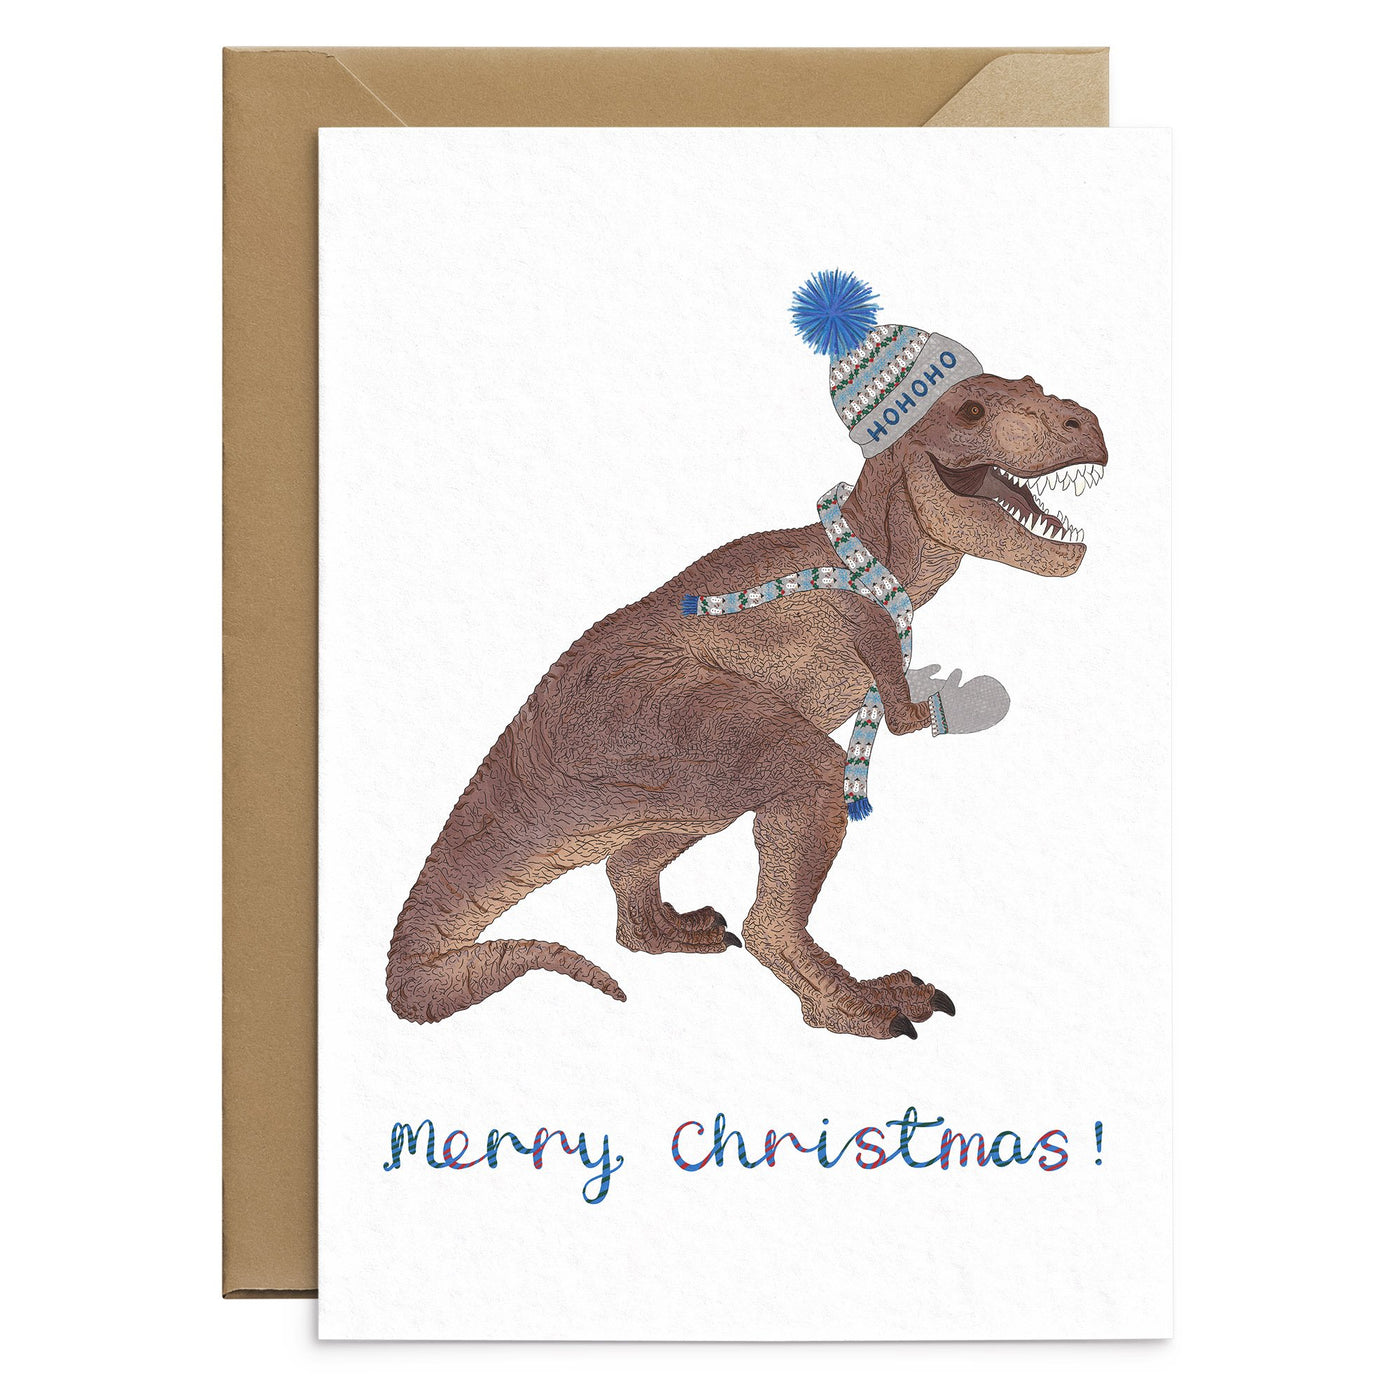 The T-rex Dinosaur Christmas Card - Poppins & Co.